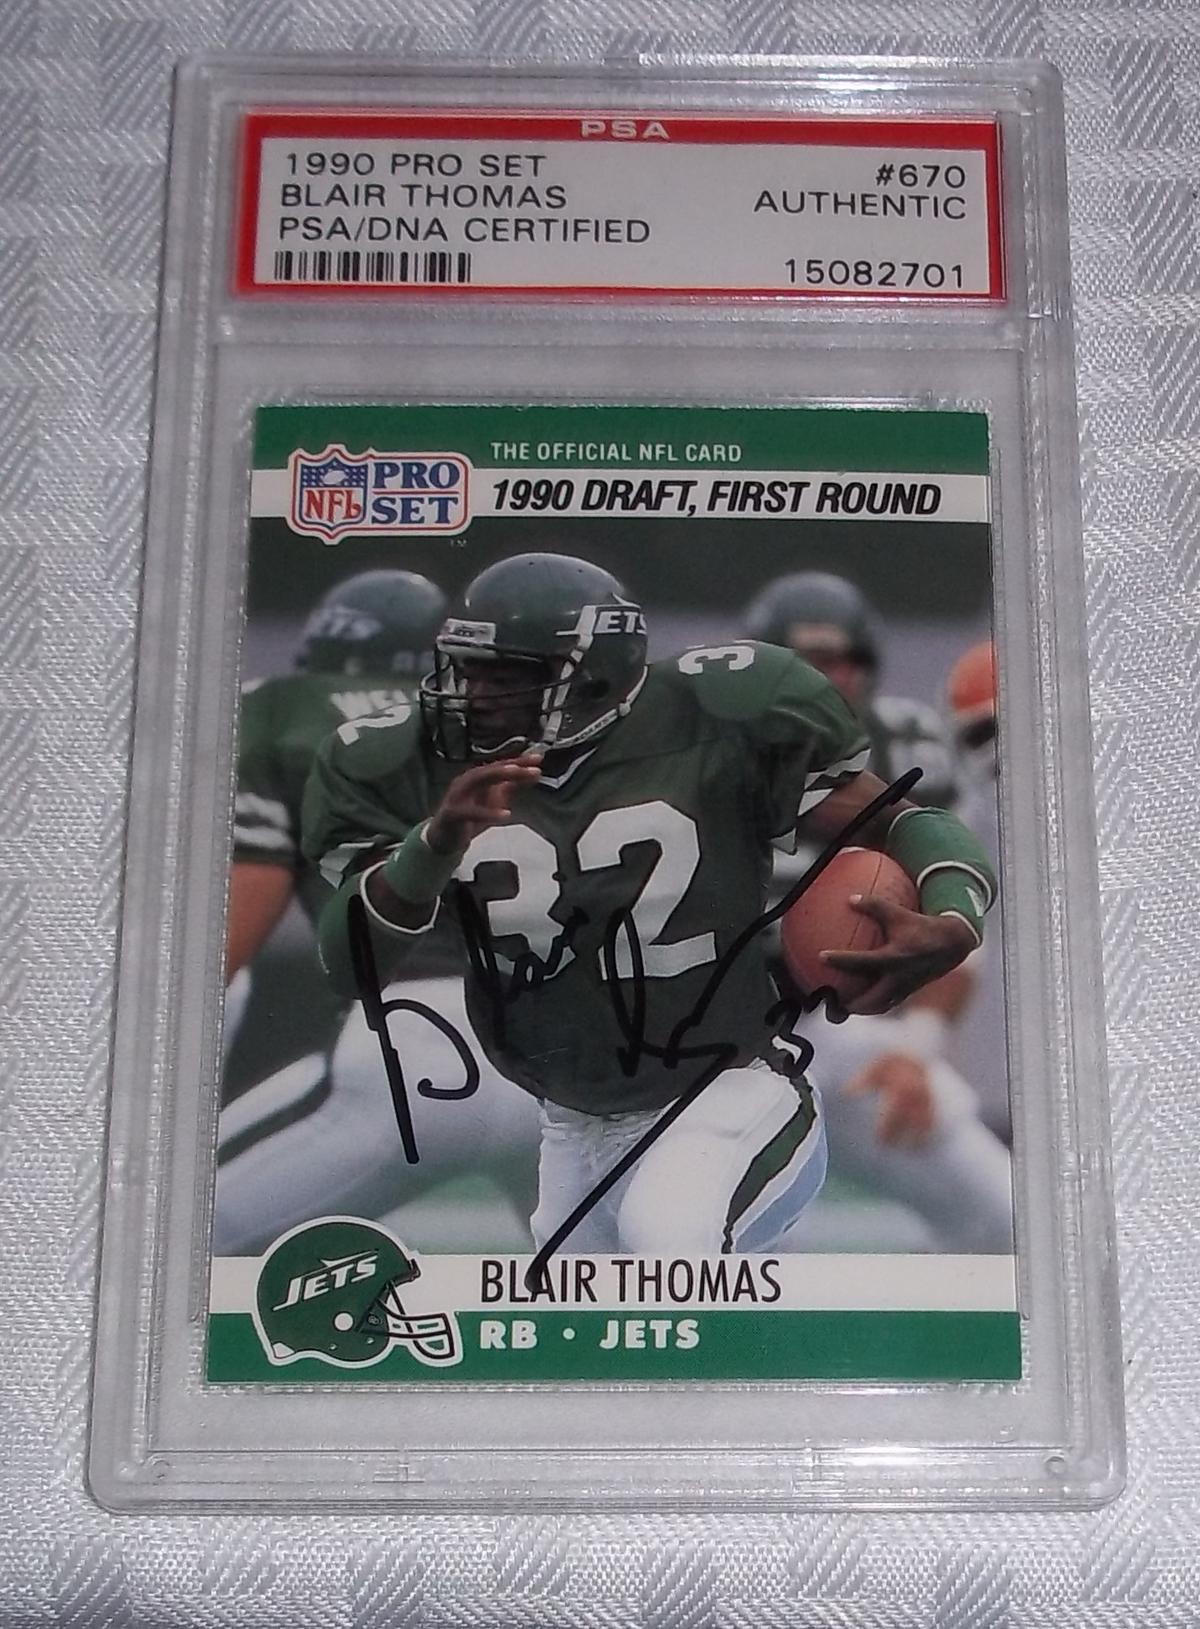 1990 Pro Set NFL Football Rookie Card #670 Blair Thomas Jets Autographed PSA Slabbed